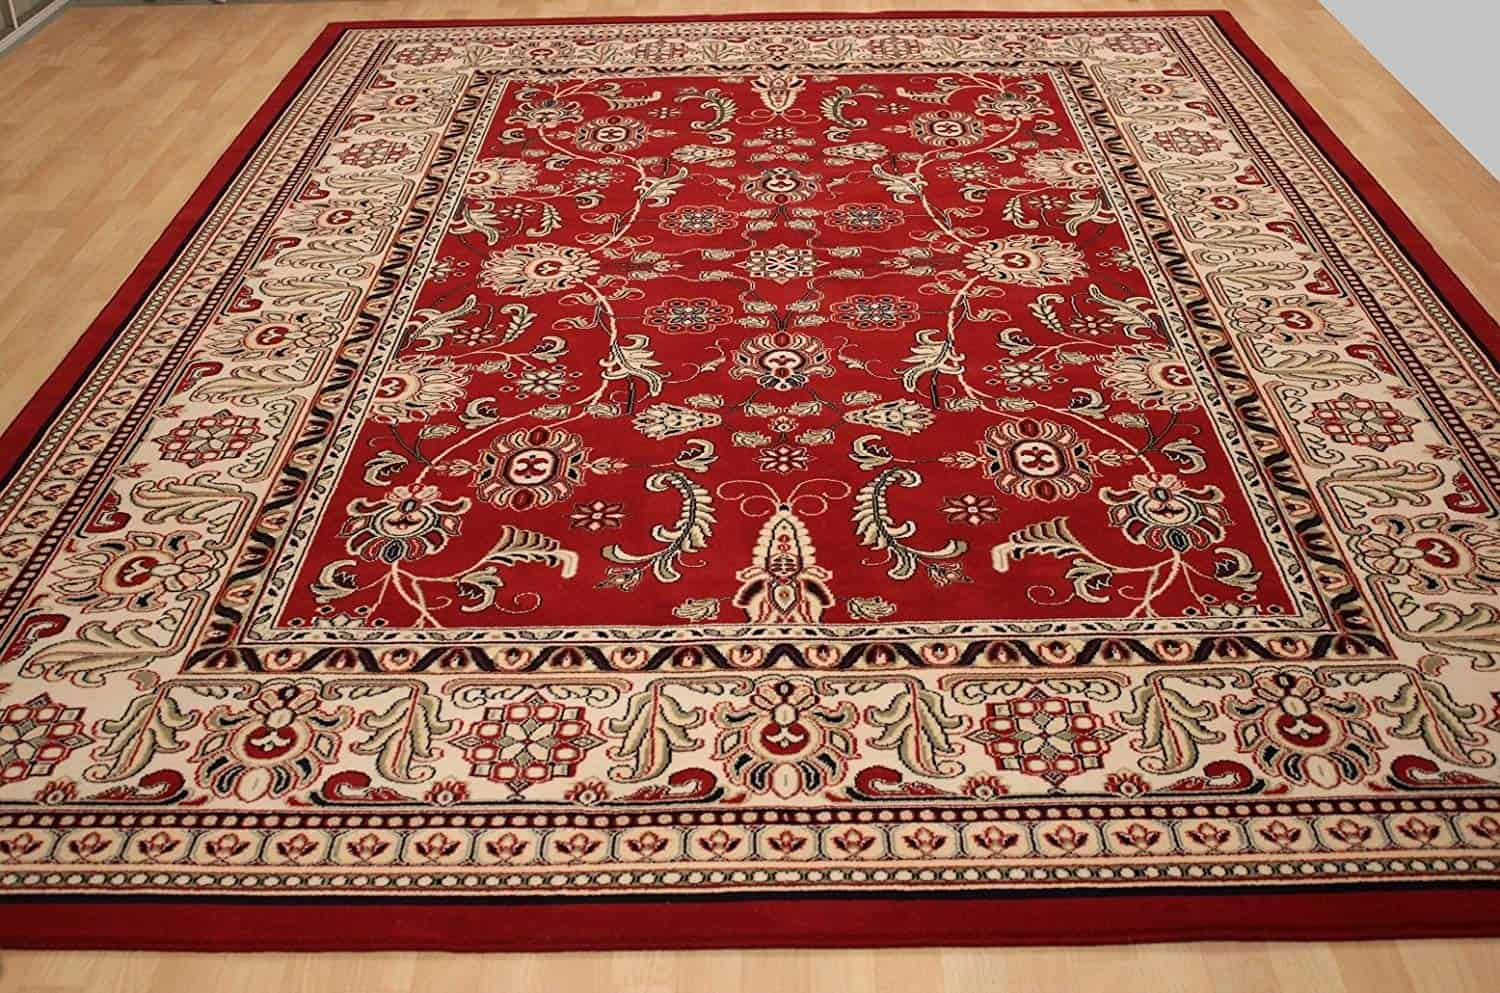 Carpets Loomier | ABC Italia - Carpets Import and Production